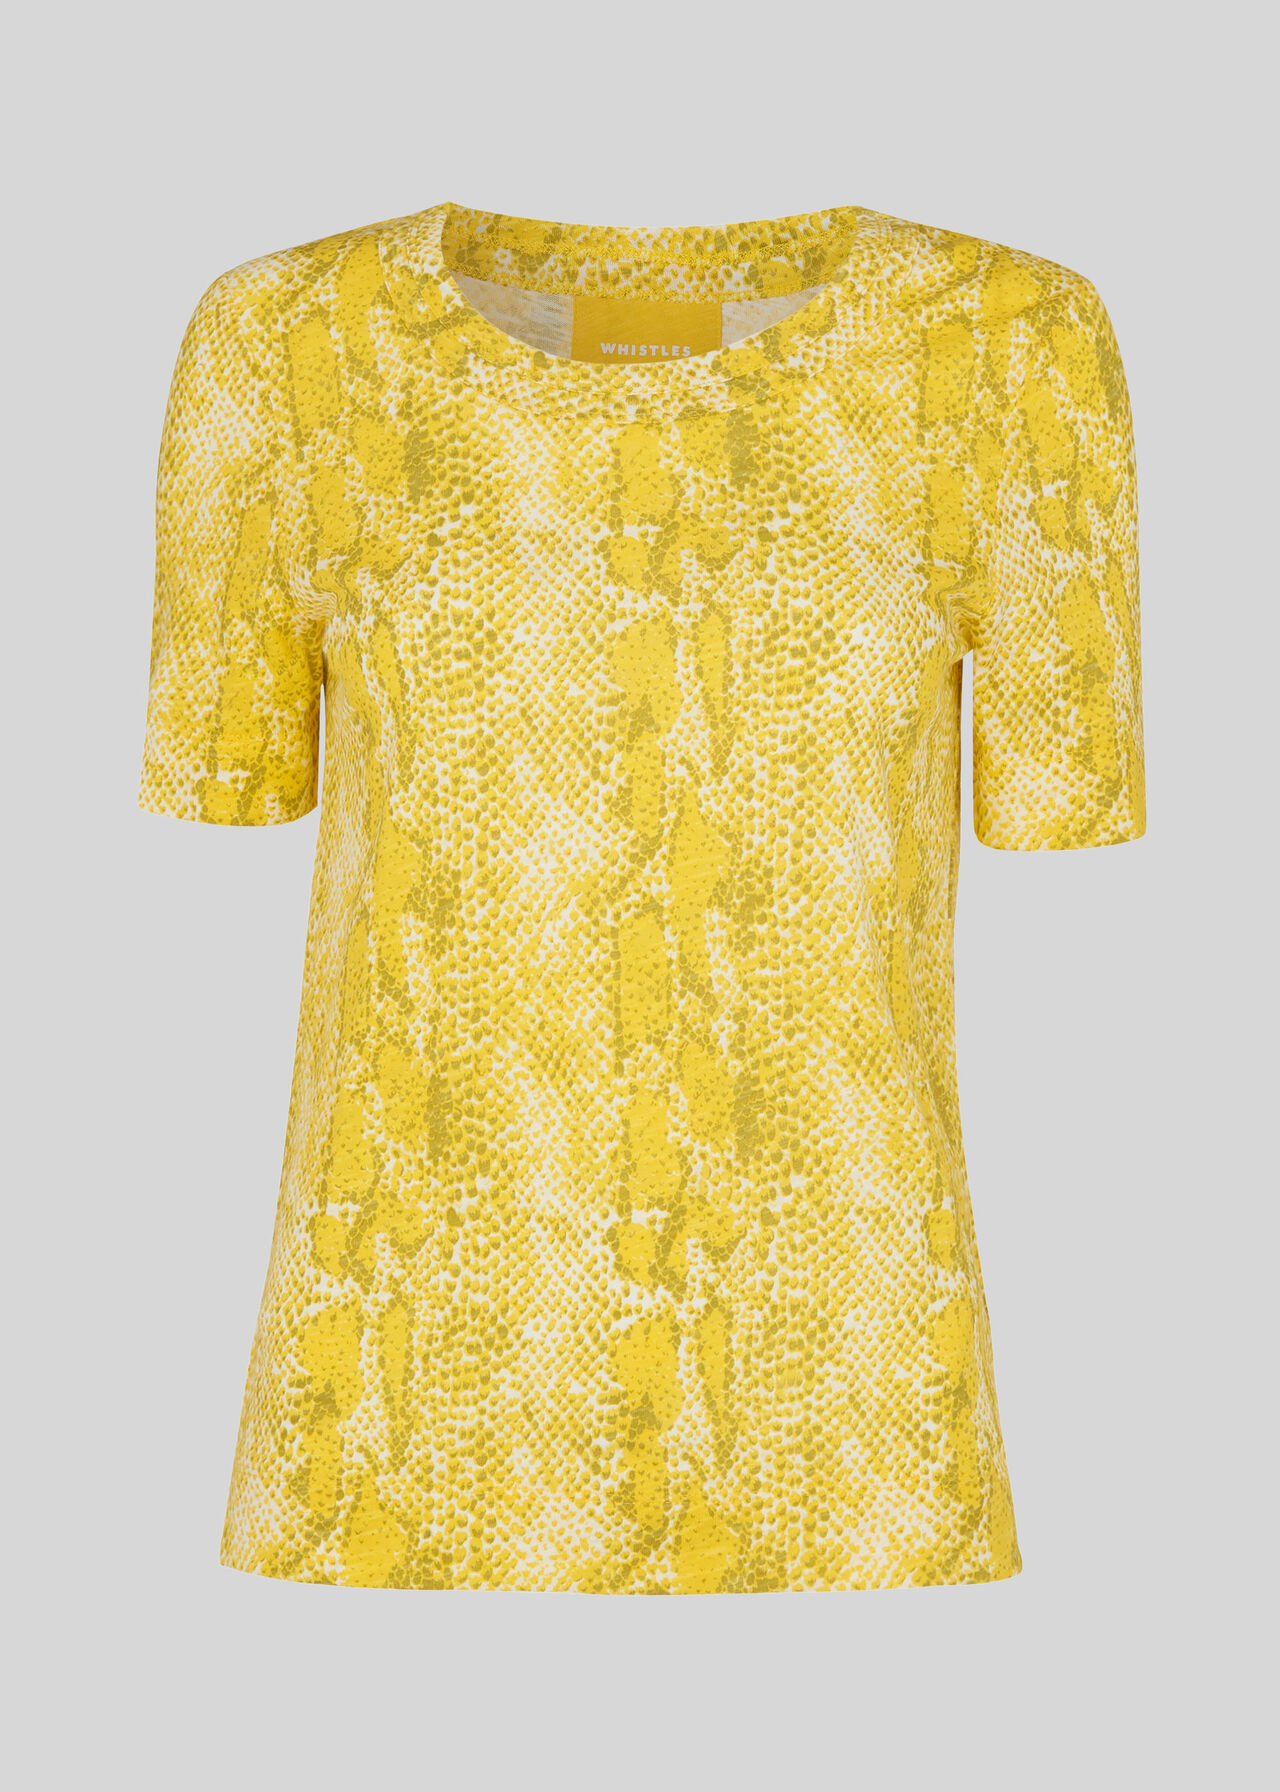 Python Print Rosa T-Shirt Yellow/Multi